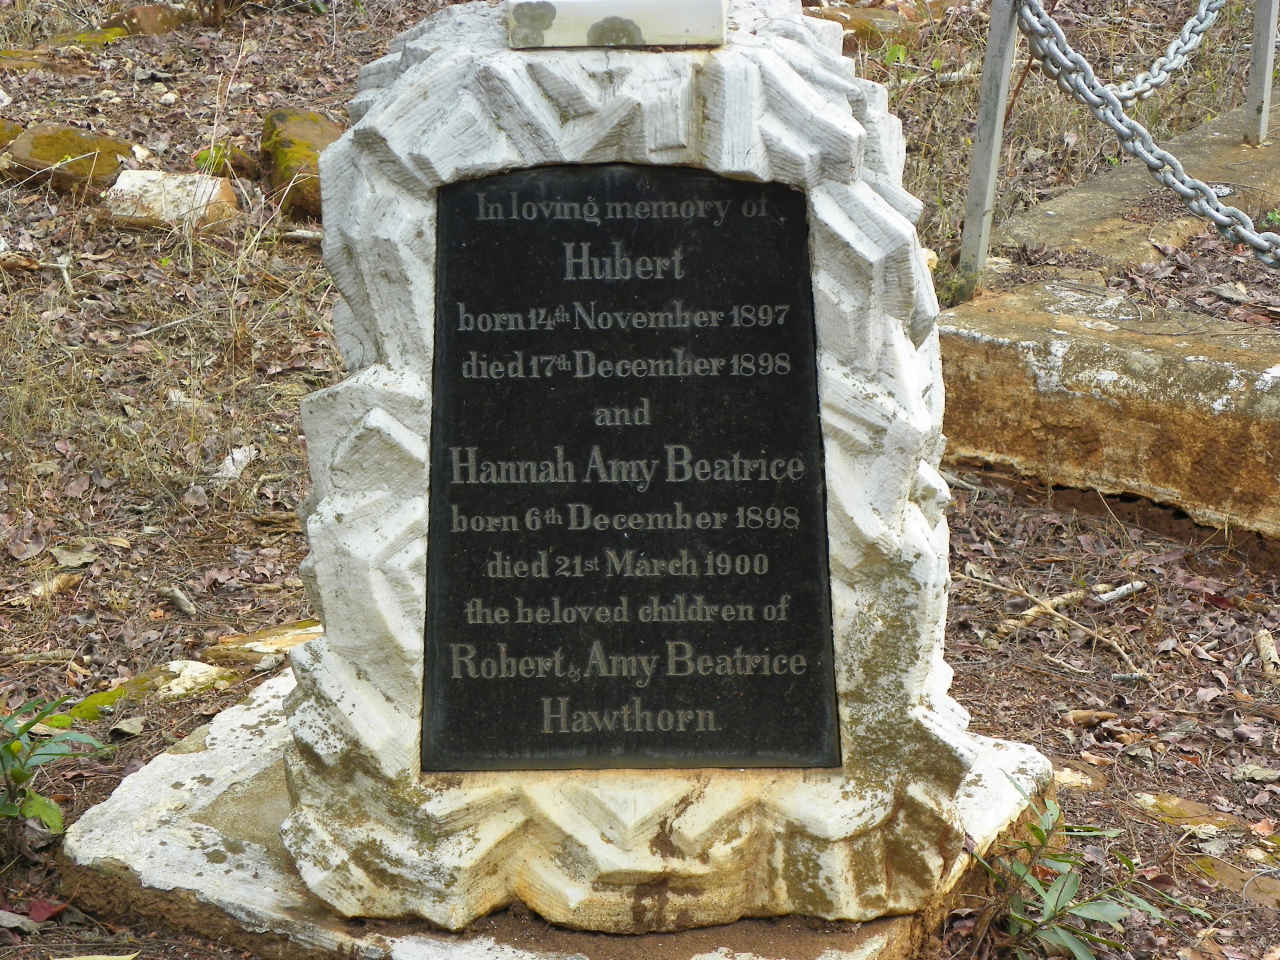 HAWTHORN Hubert 1897-1898 :: HAWTHORN Hannah Amy Beatrice 1898-1900